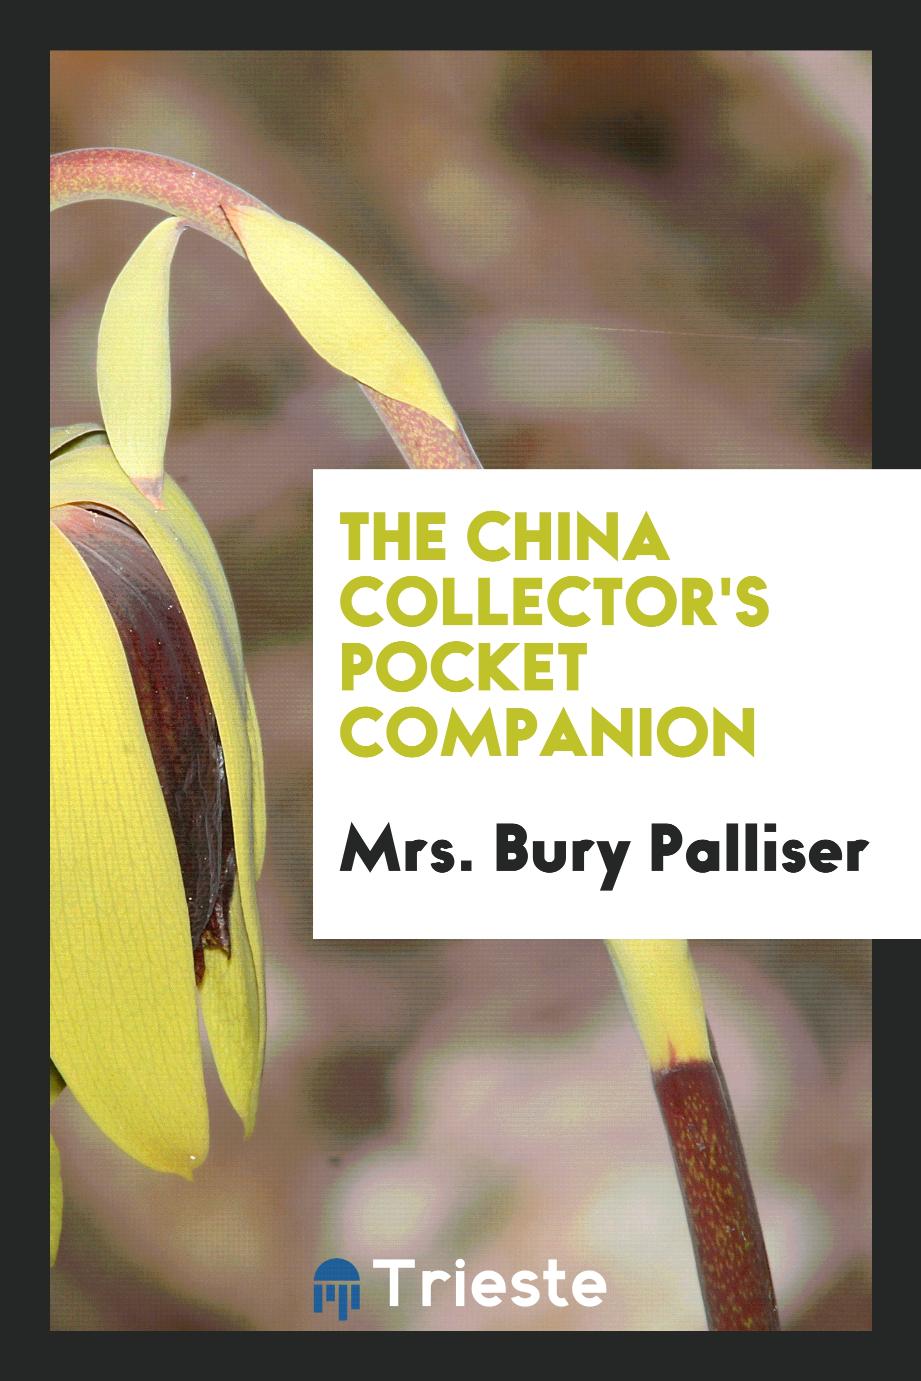 The China Collector's Pocket Companion